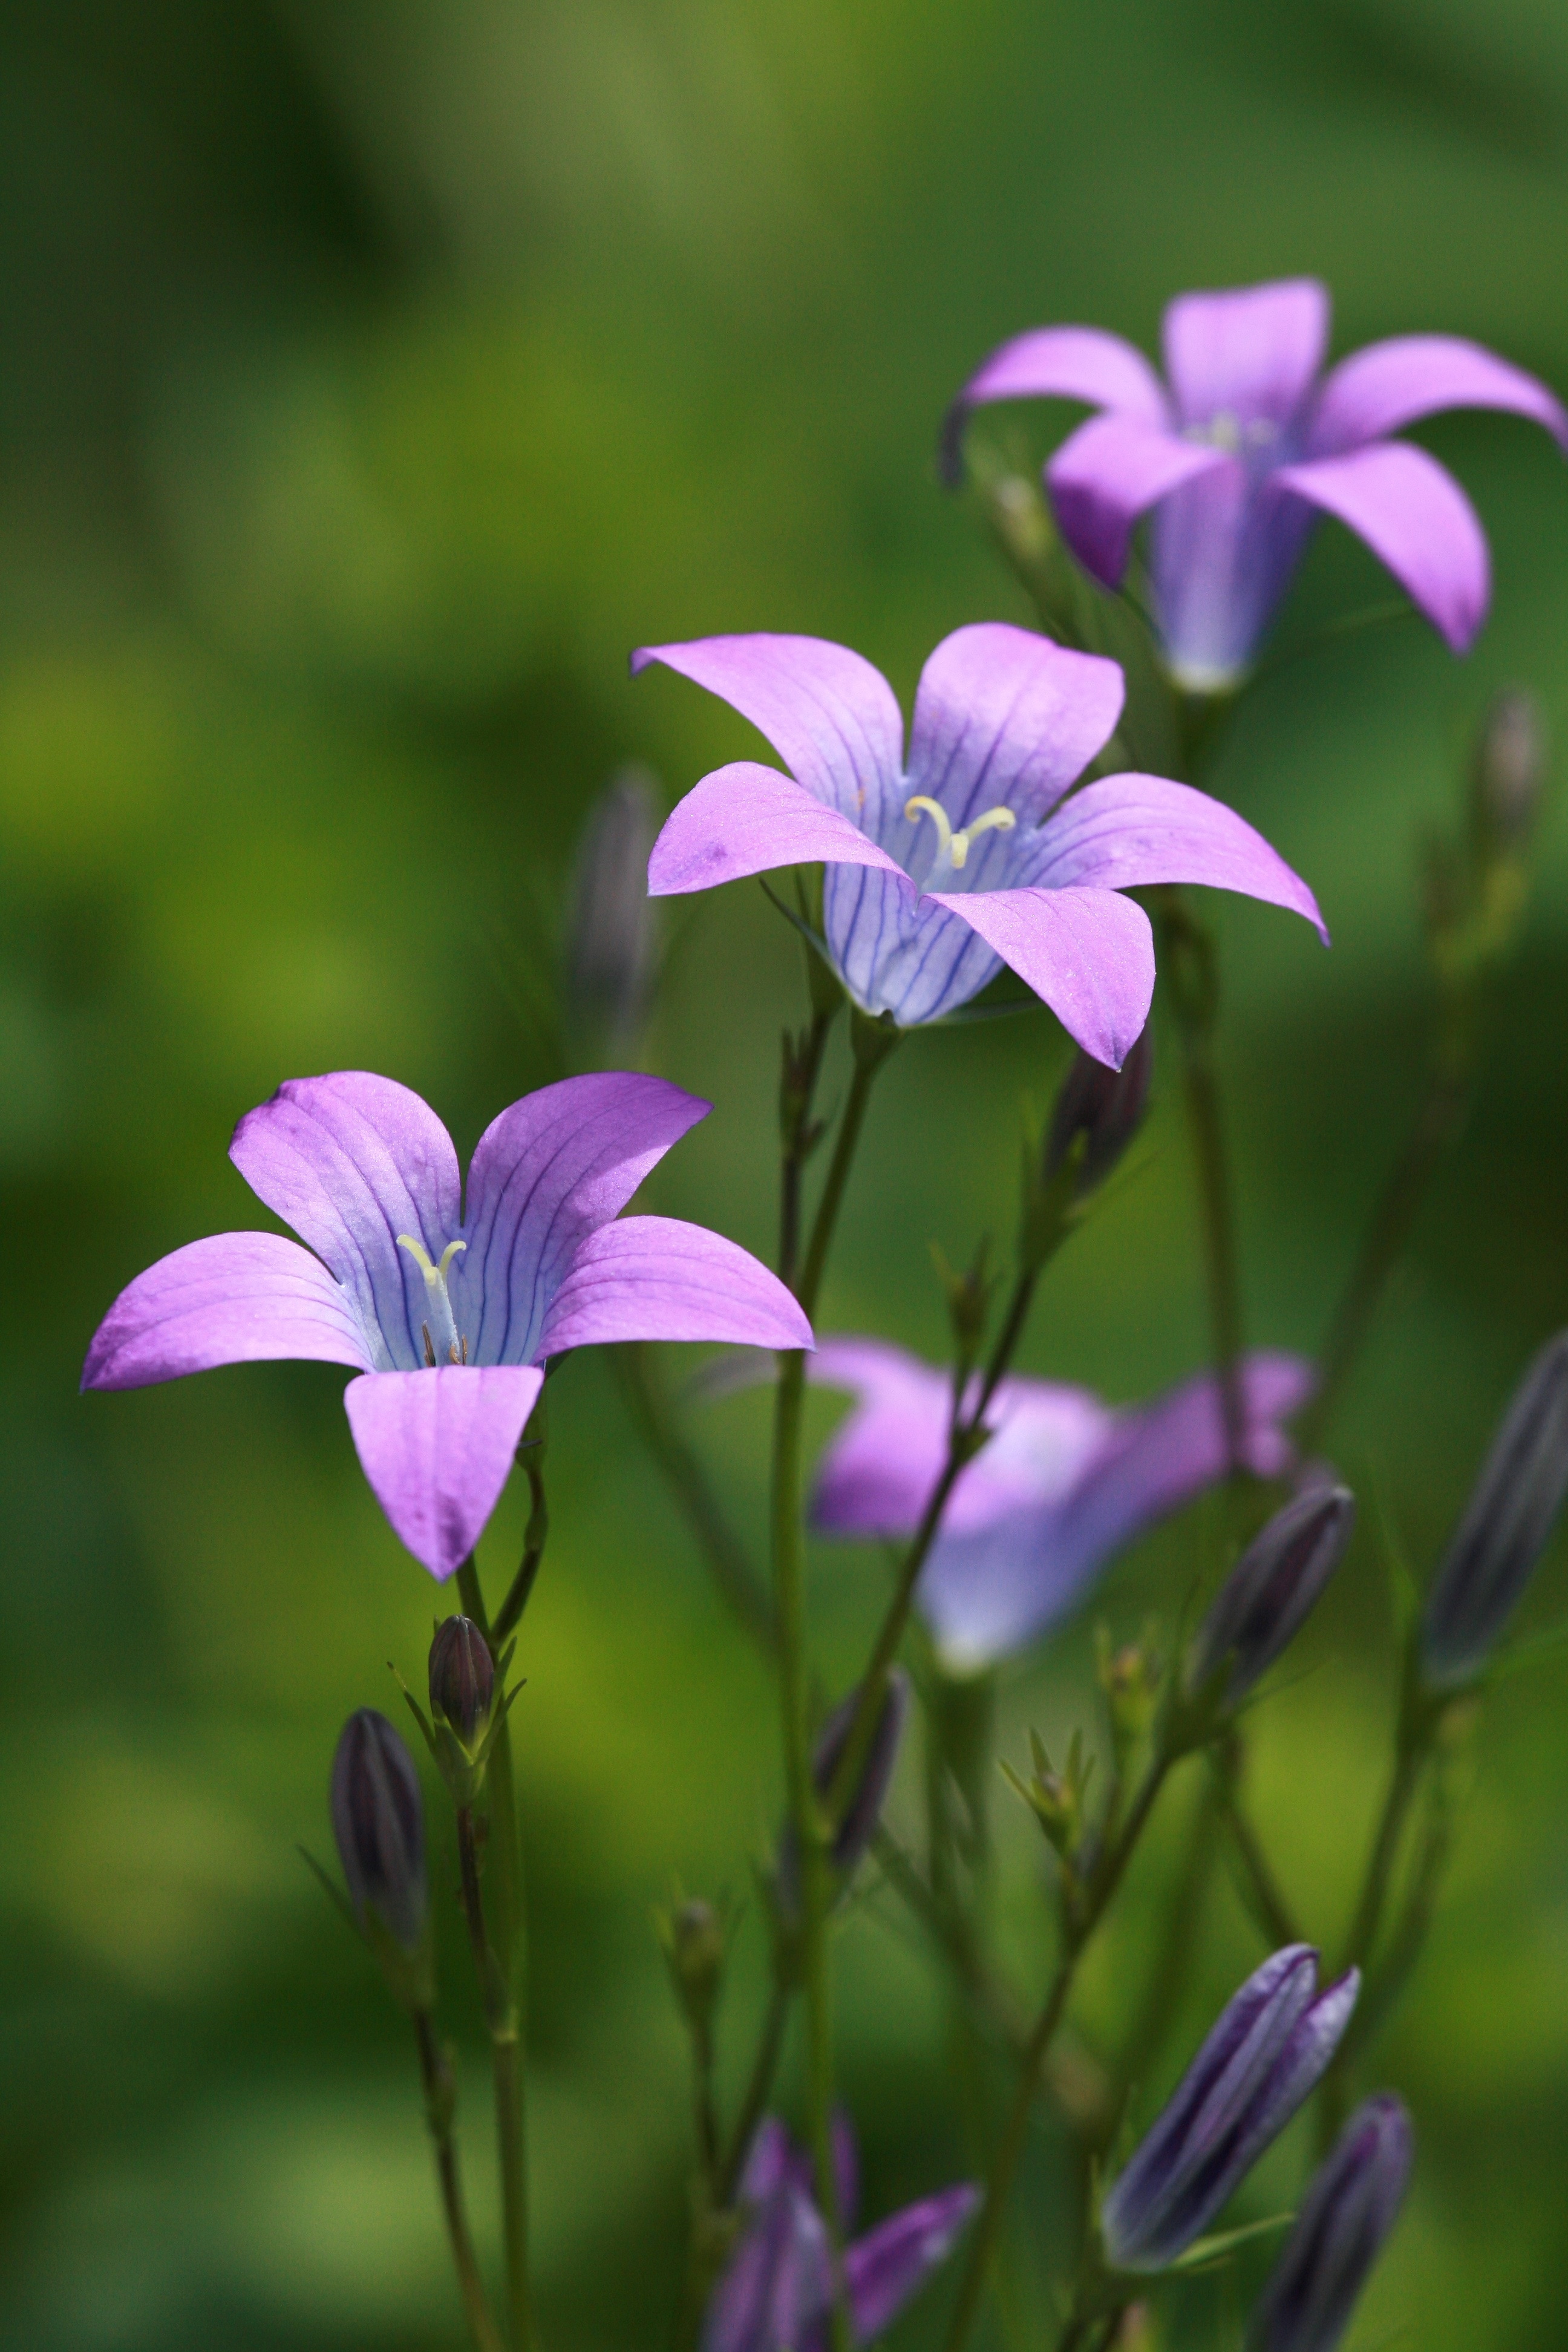 purple and gray 5 broad petal flowers